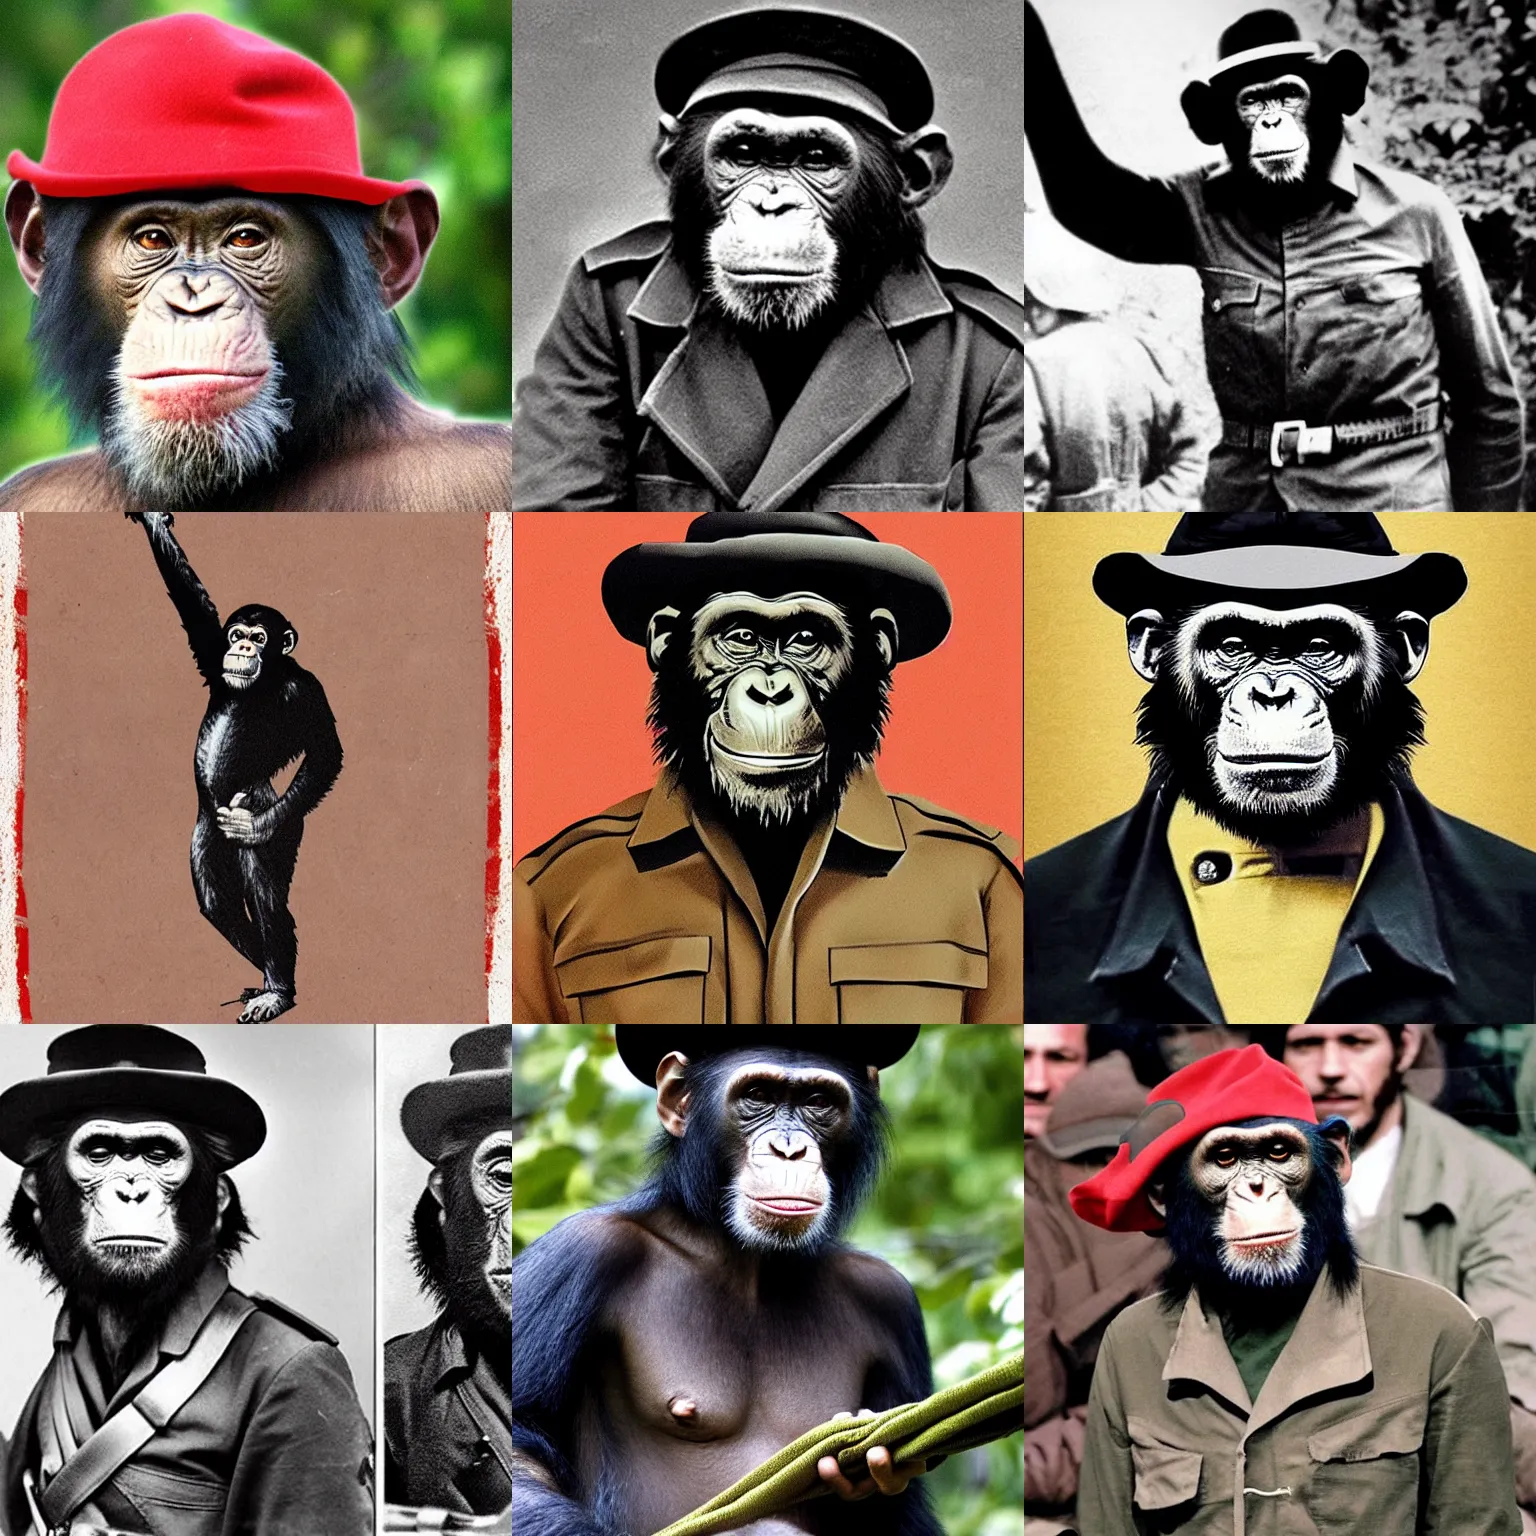 Prompt: revolutionary chimpanzee wearing che guevara's hat